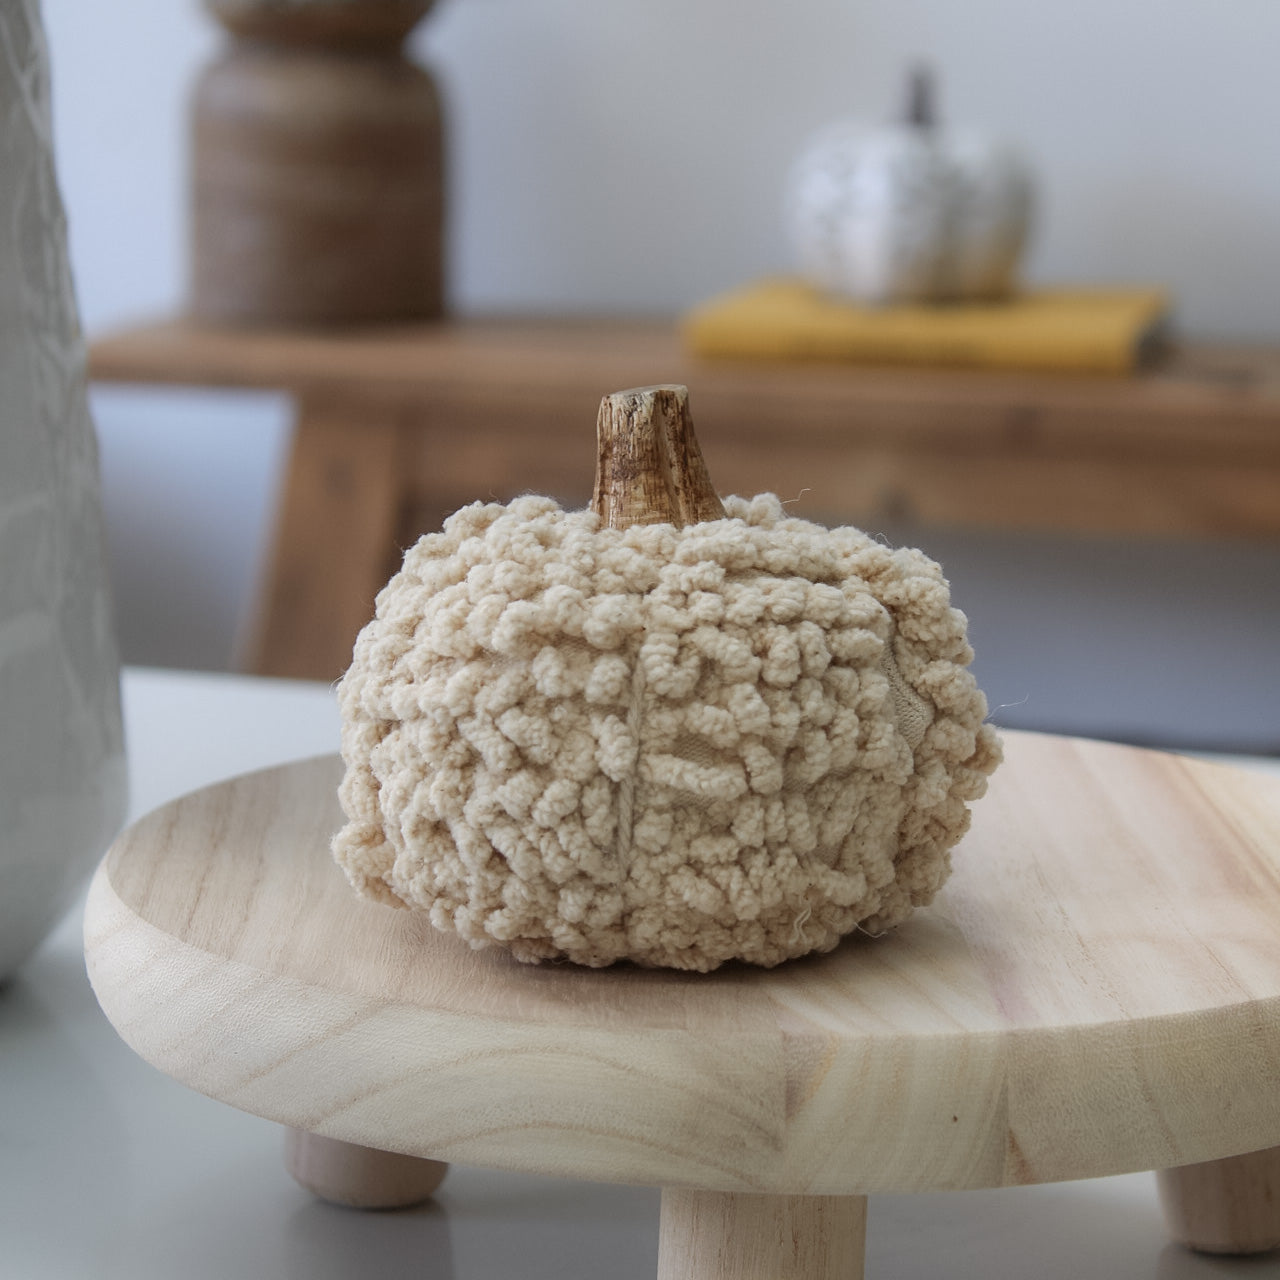 IMPERFECT - Neutral Cotton Pumpkin with Wooden Stalk